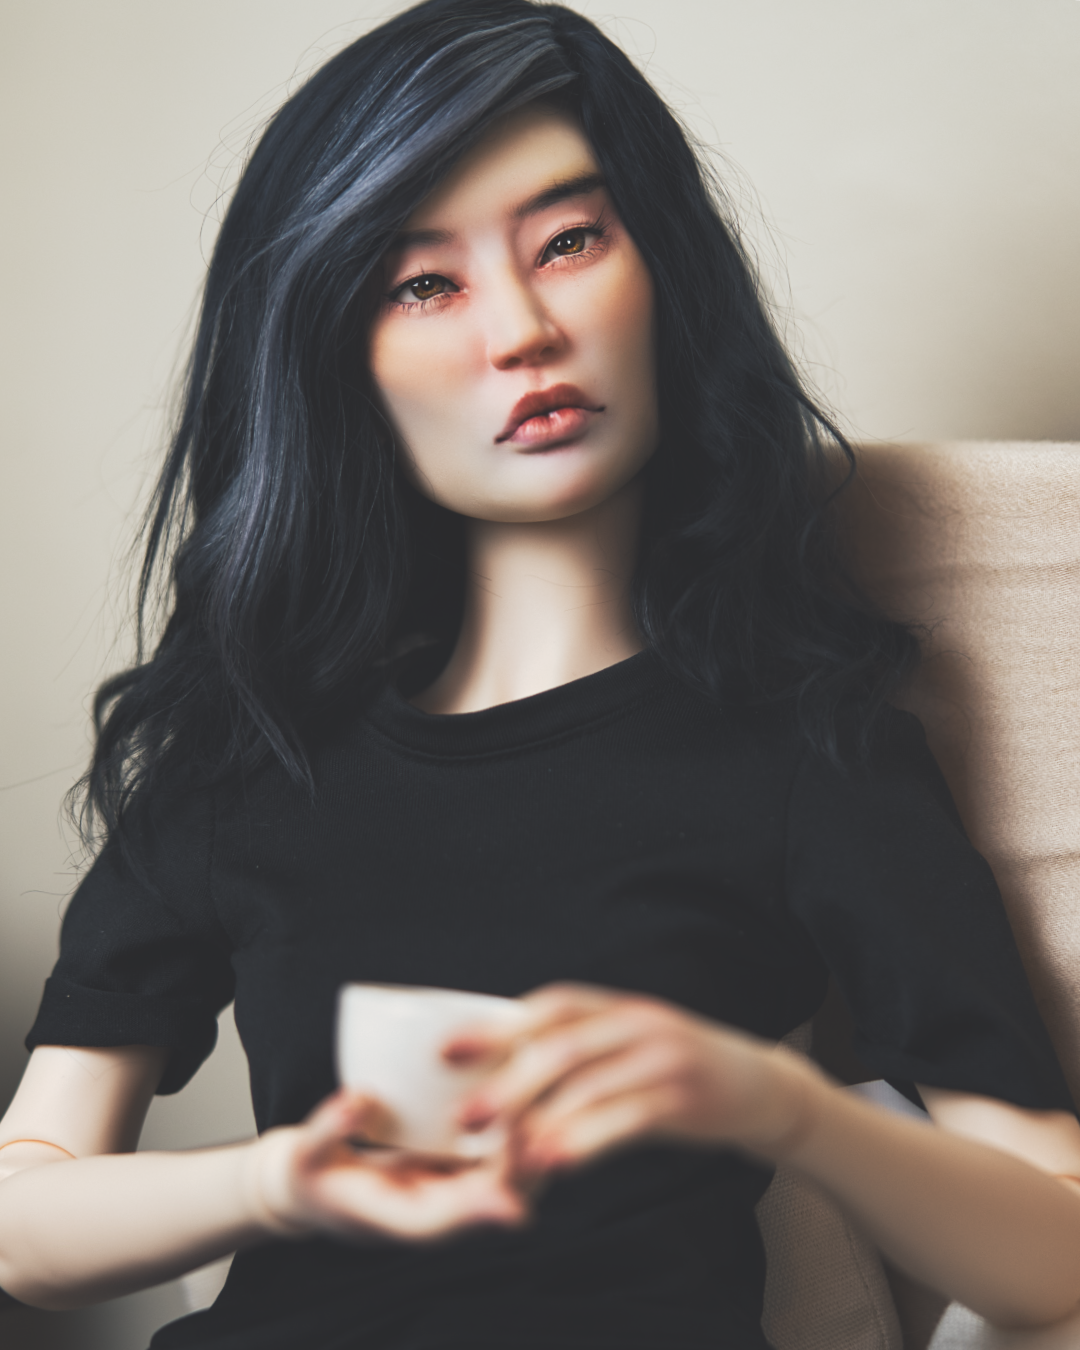 A female asian doll